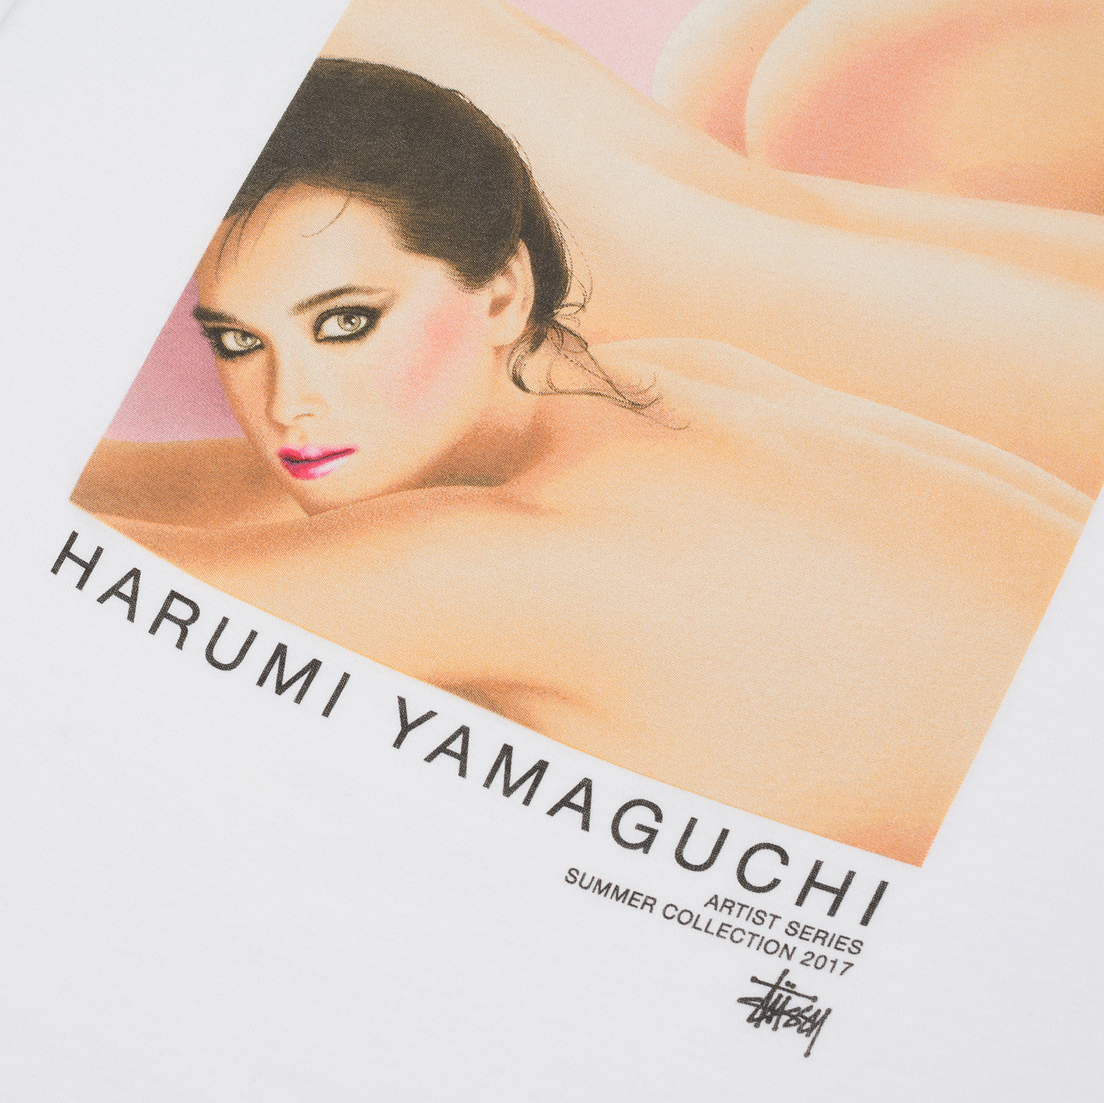 Stussy Мужская футболка Harumi Yamaguchi Nude